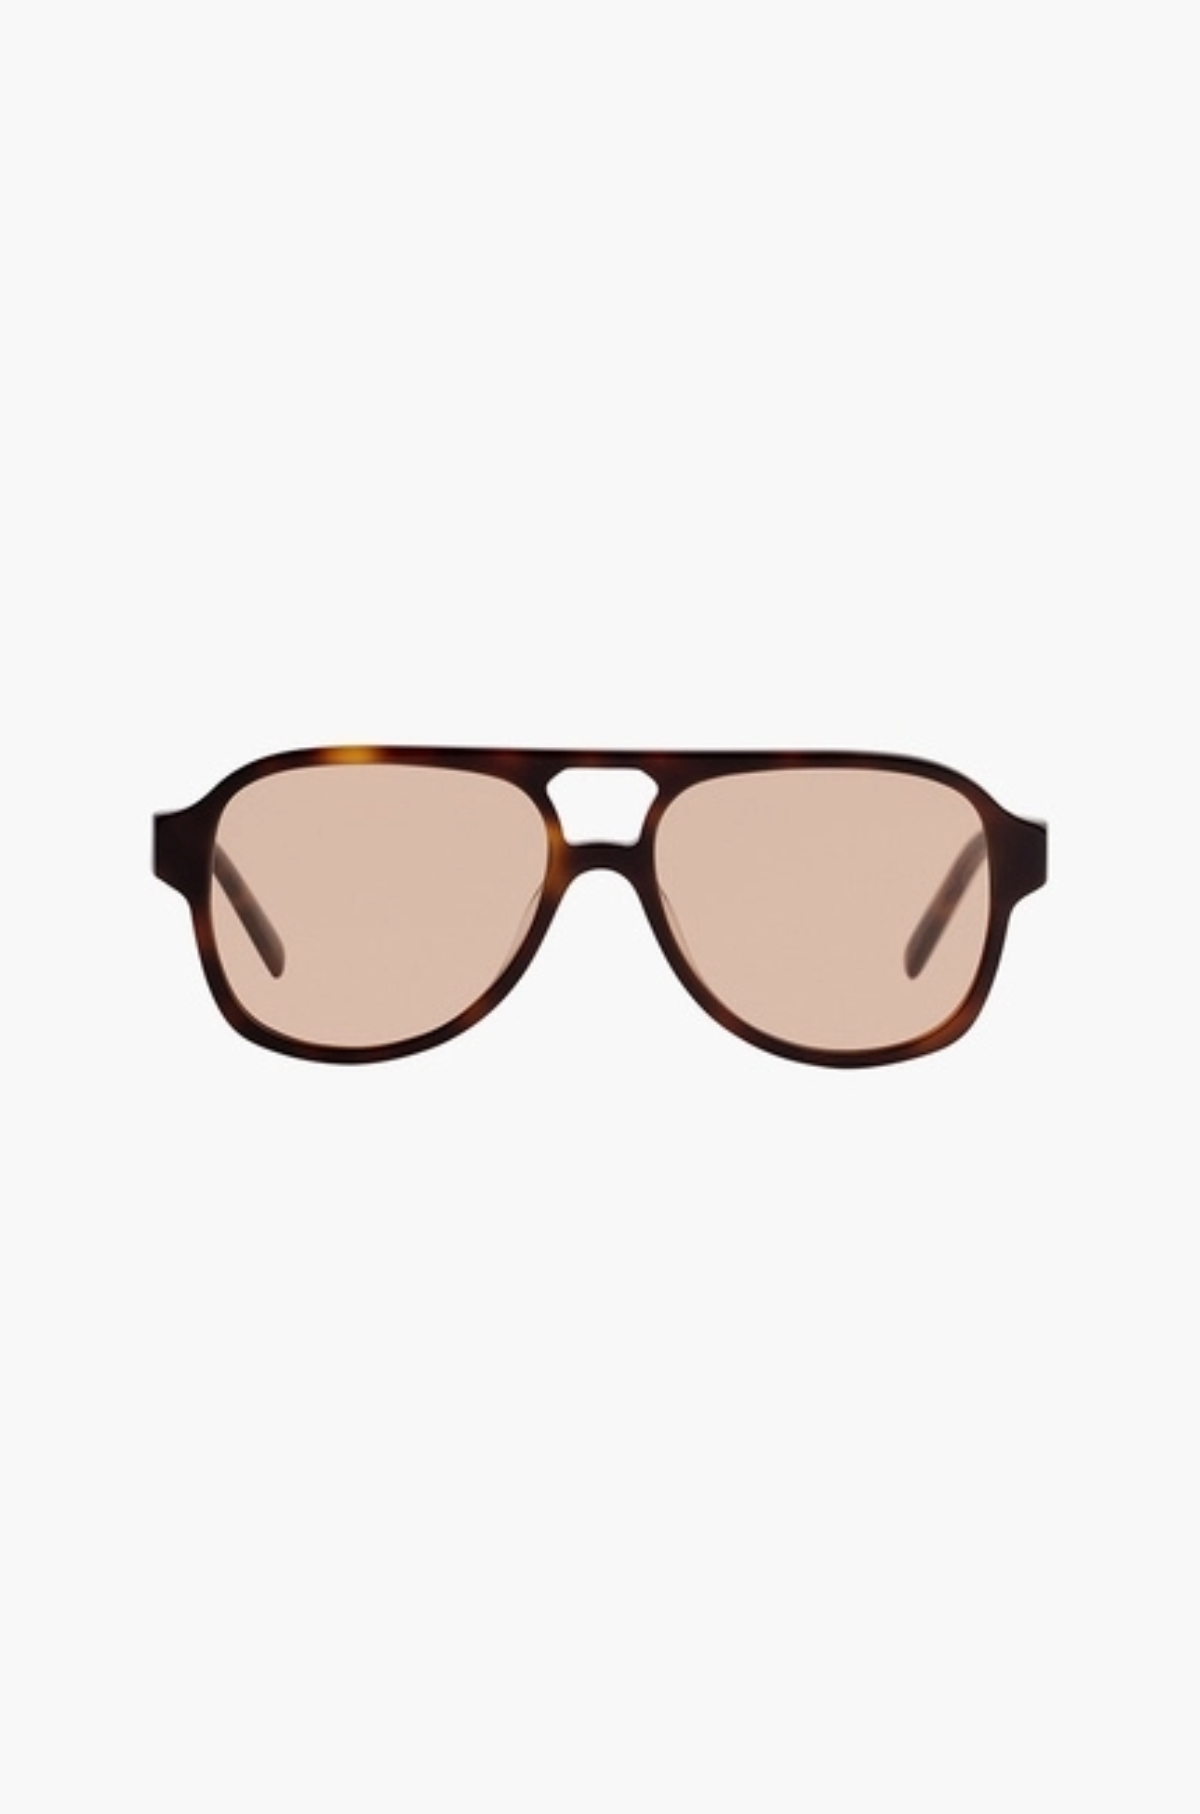 Corlin - Gelo Sunglasses - Tortoise Cinnemon